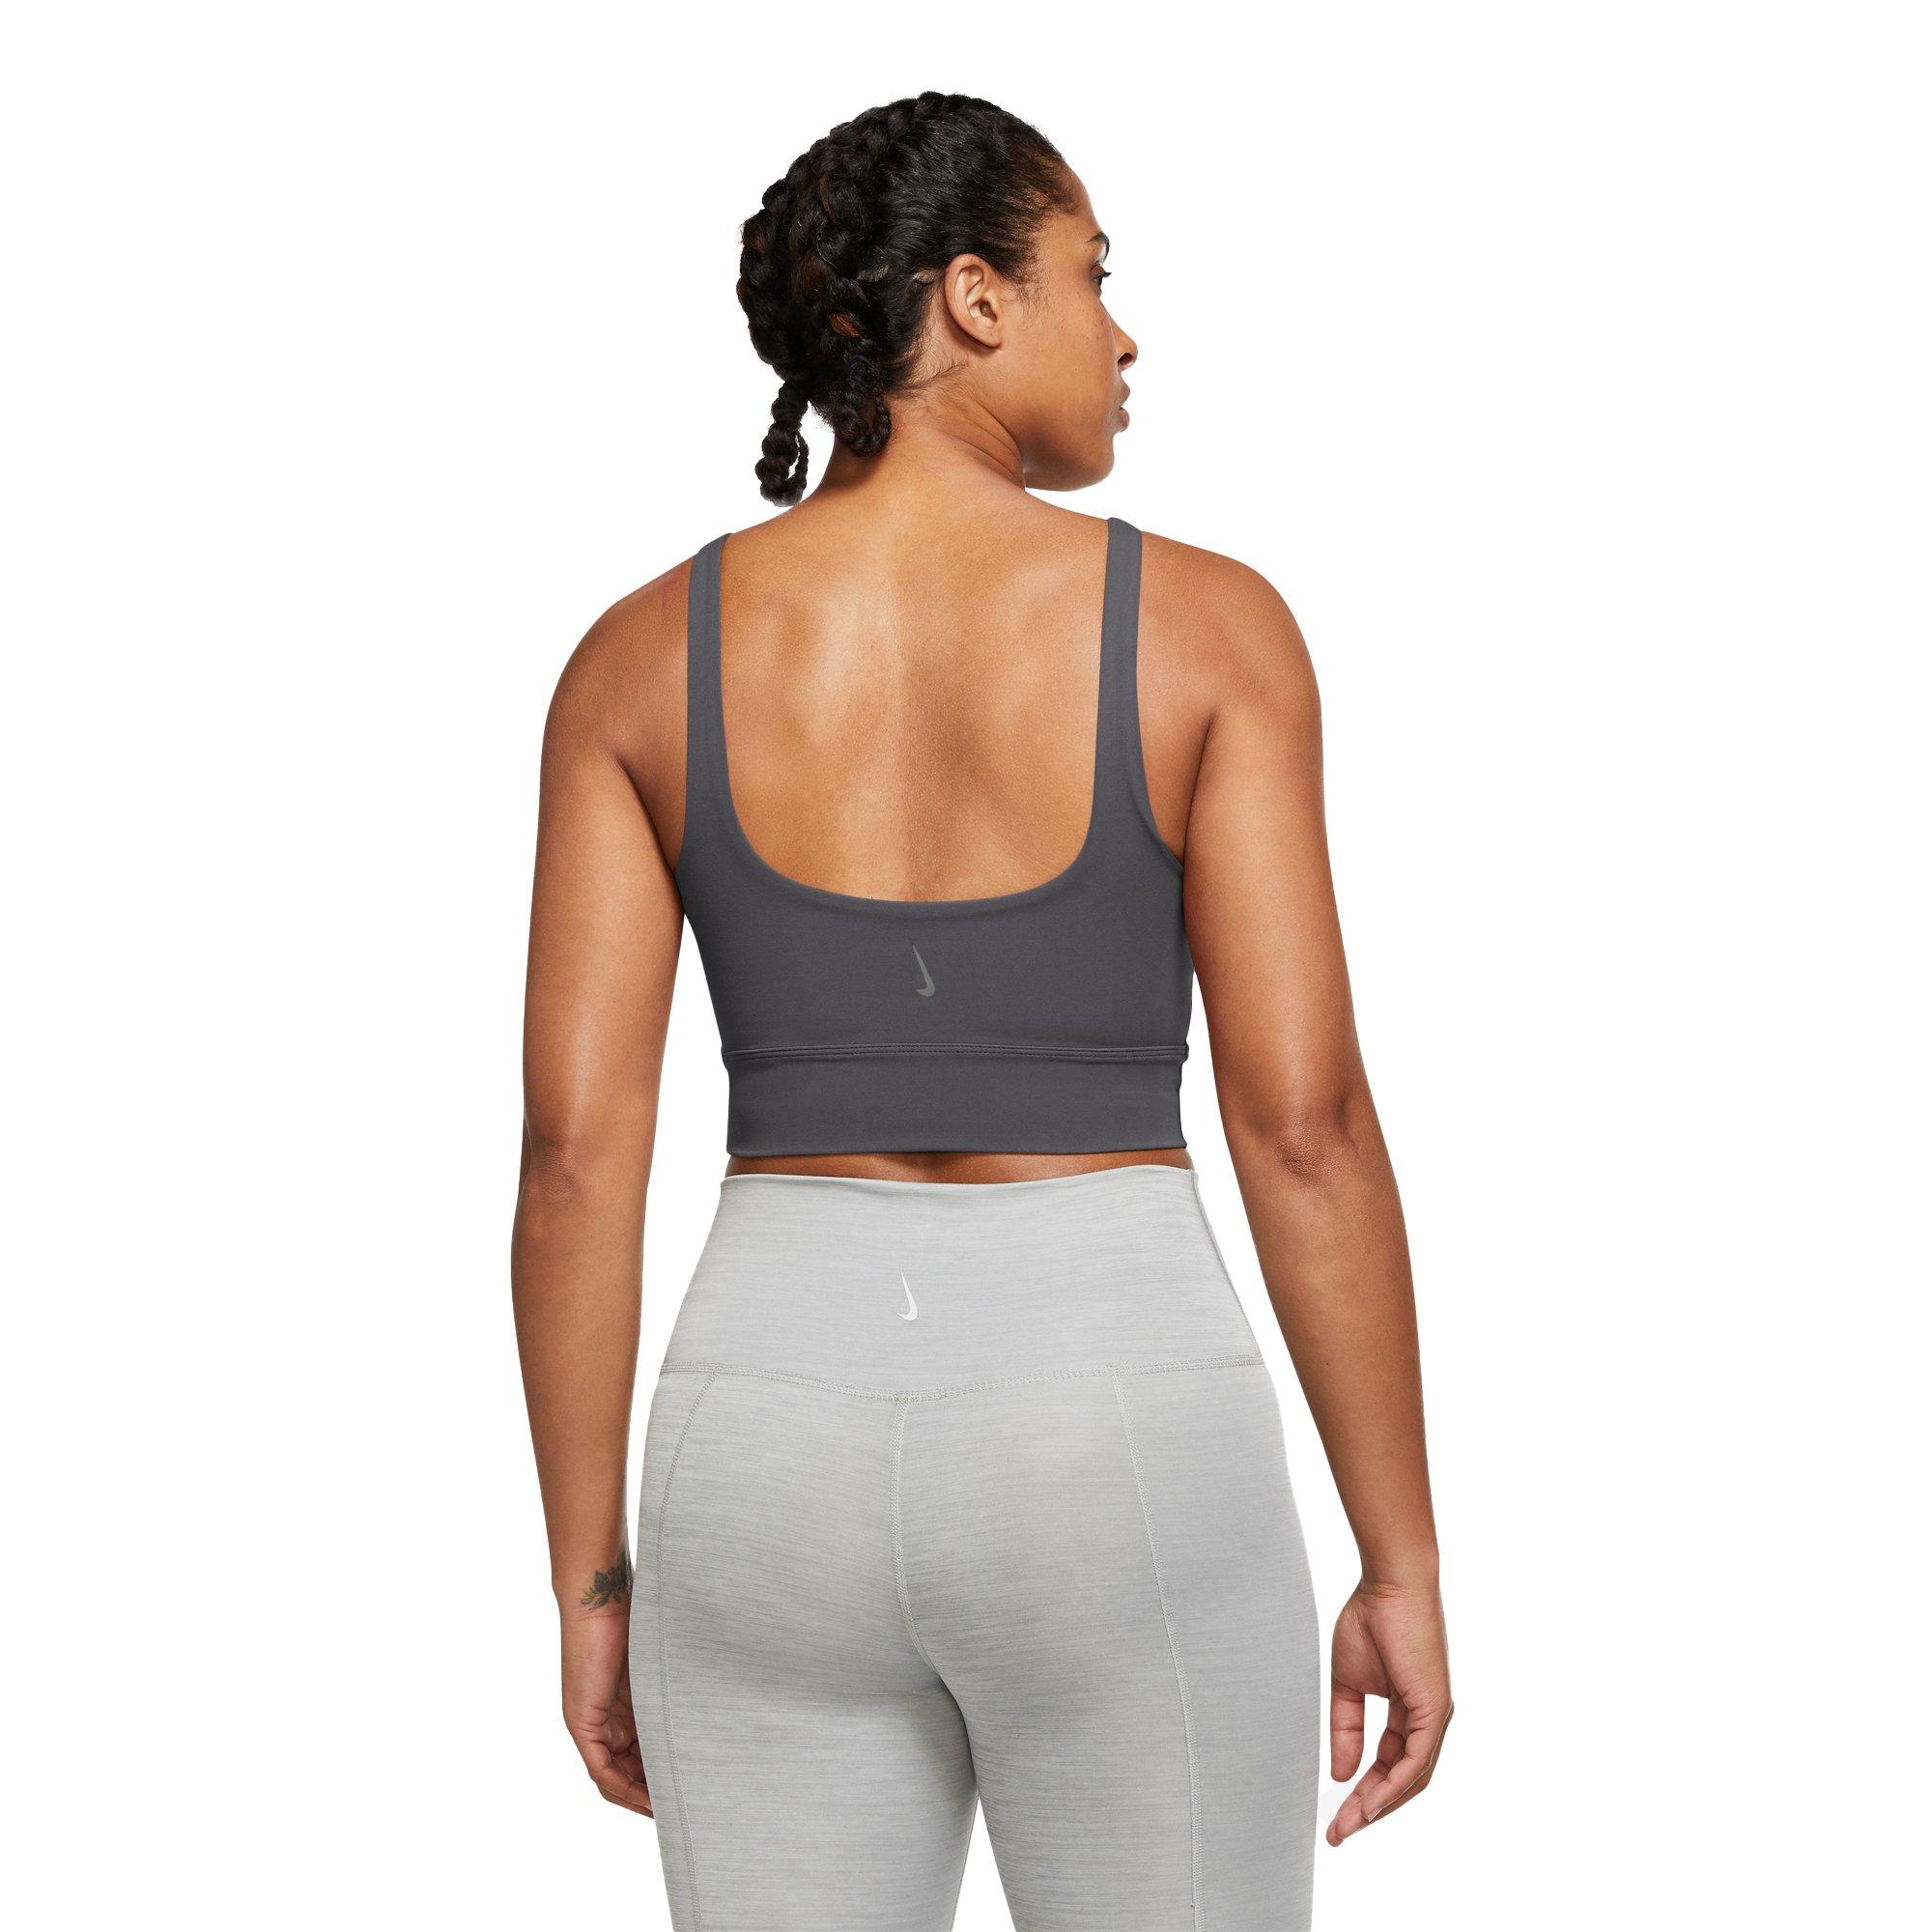 NIKE Yoga Luxe Infinalon Crop Top and Shorts Set